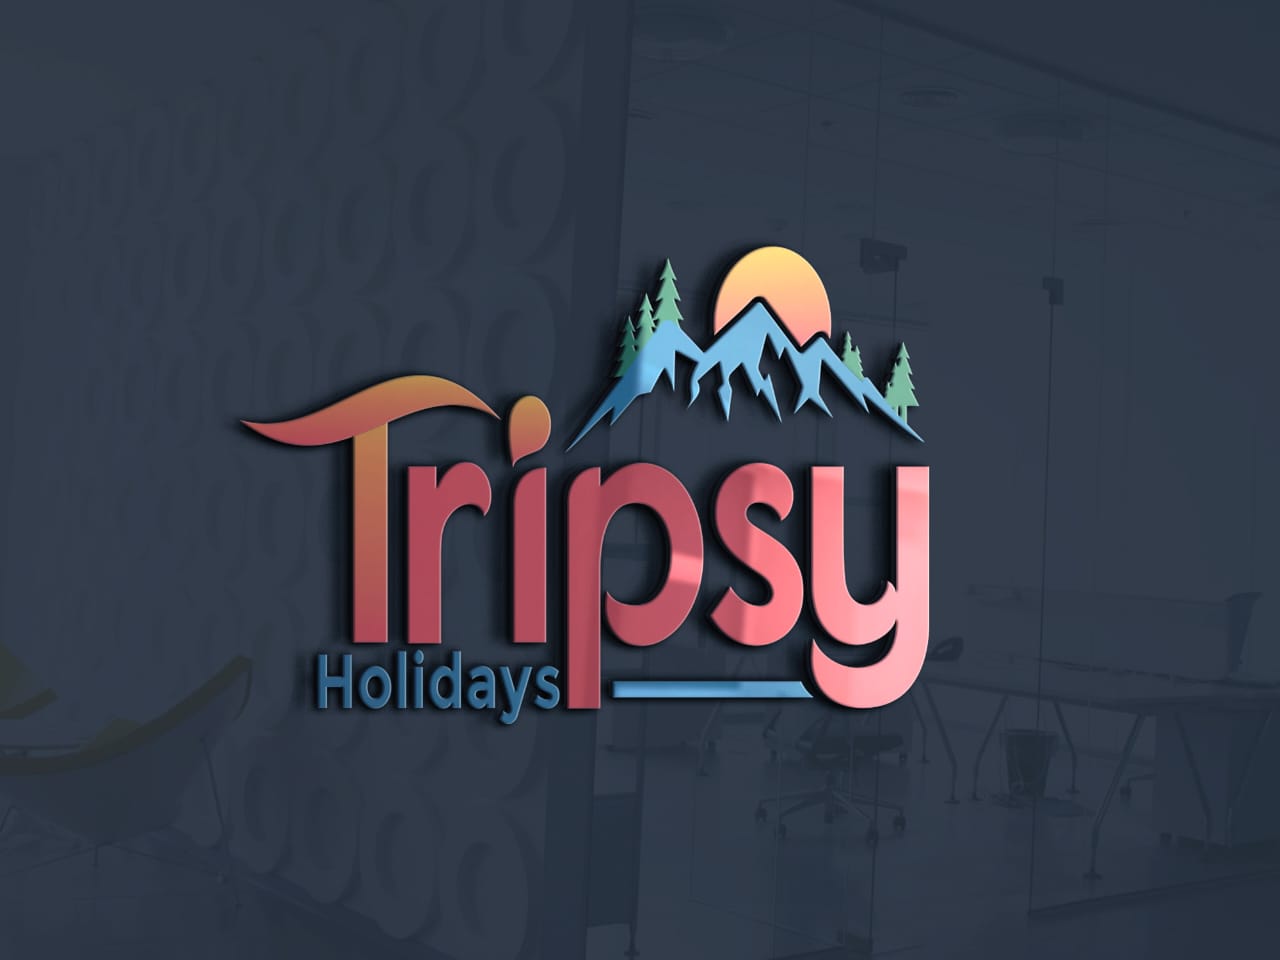 Tripsy Holidays